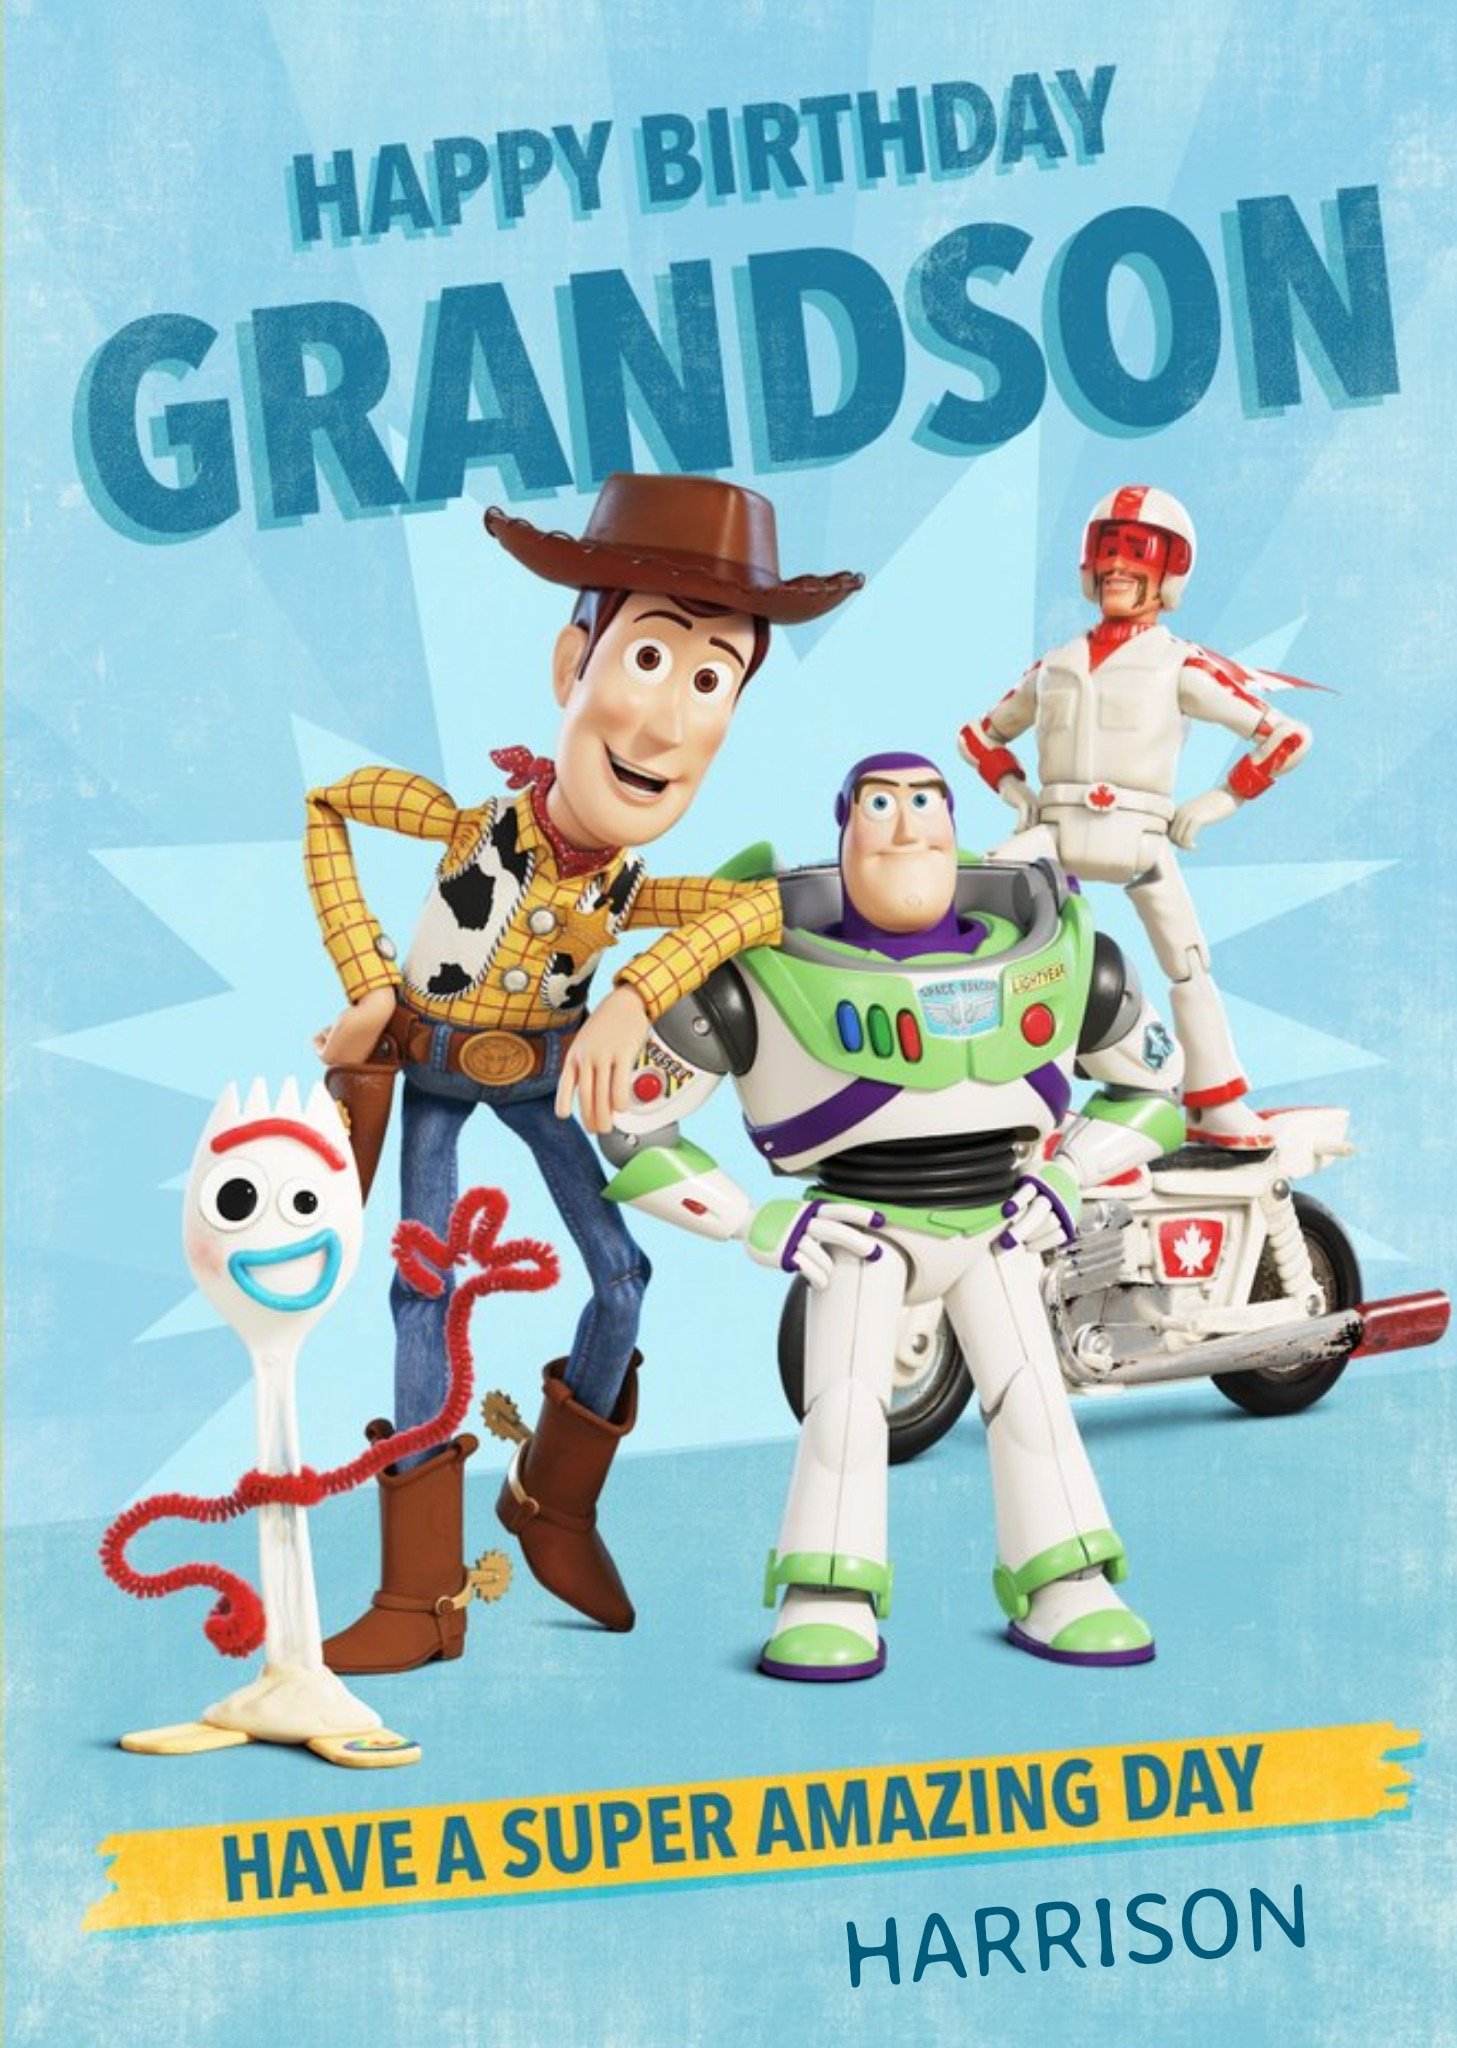 Disney Toy Story 4 - Happy Birthday Grandson Super Amazing Day, Large Card